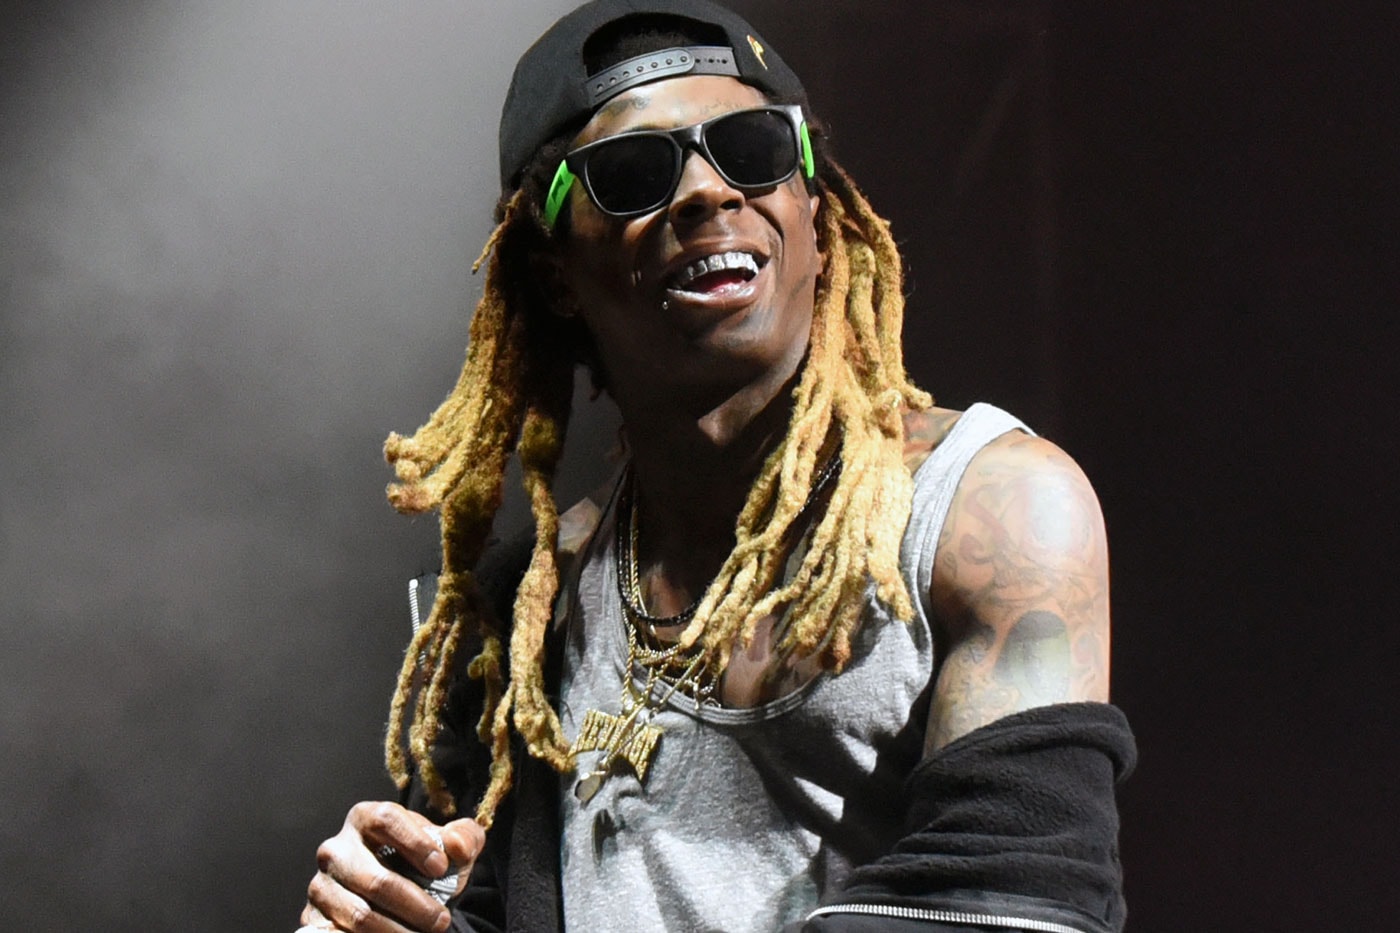 Lil Wayne Sends Shots at Birdman on New Single, "Grateful"